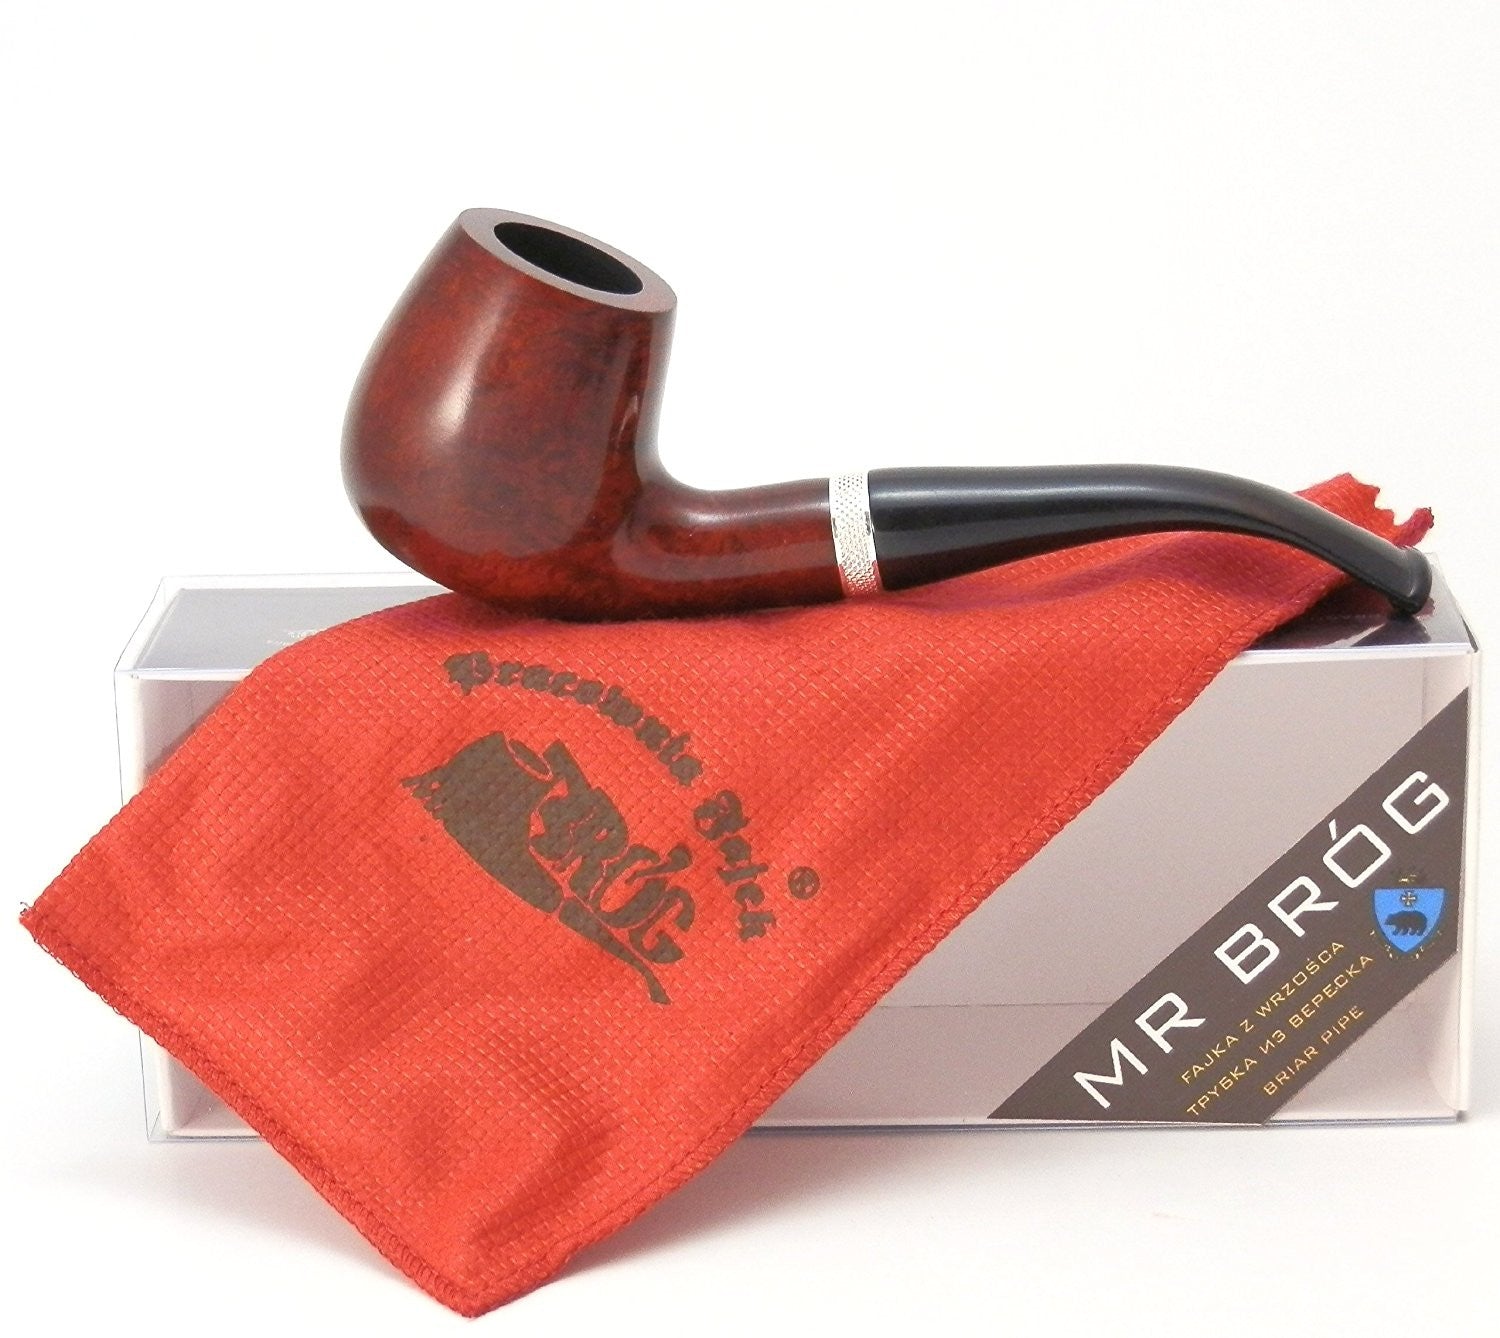 No. 82 Consul Mediterranean Briar Wood Tobacco pipe